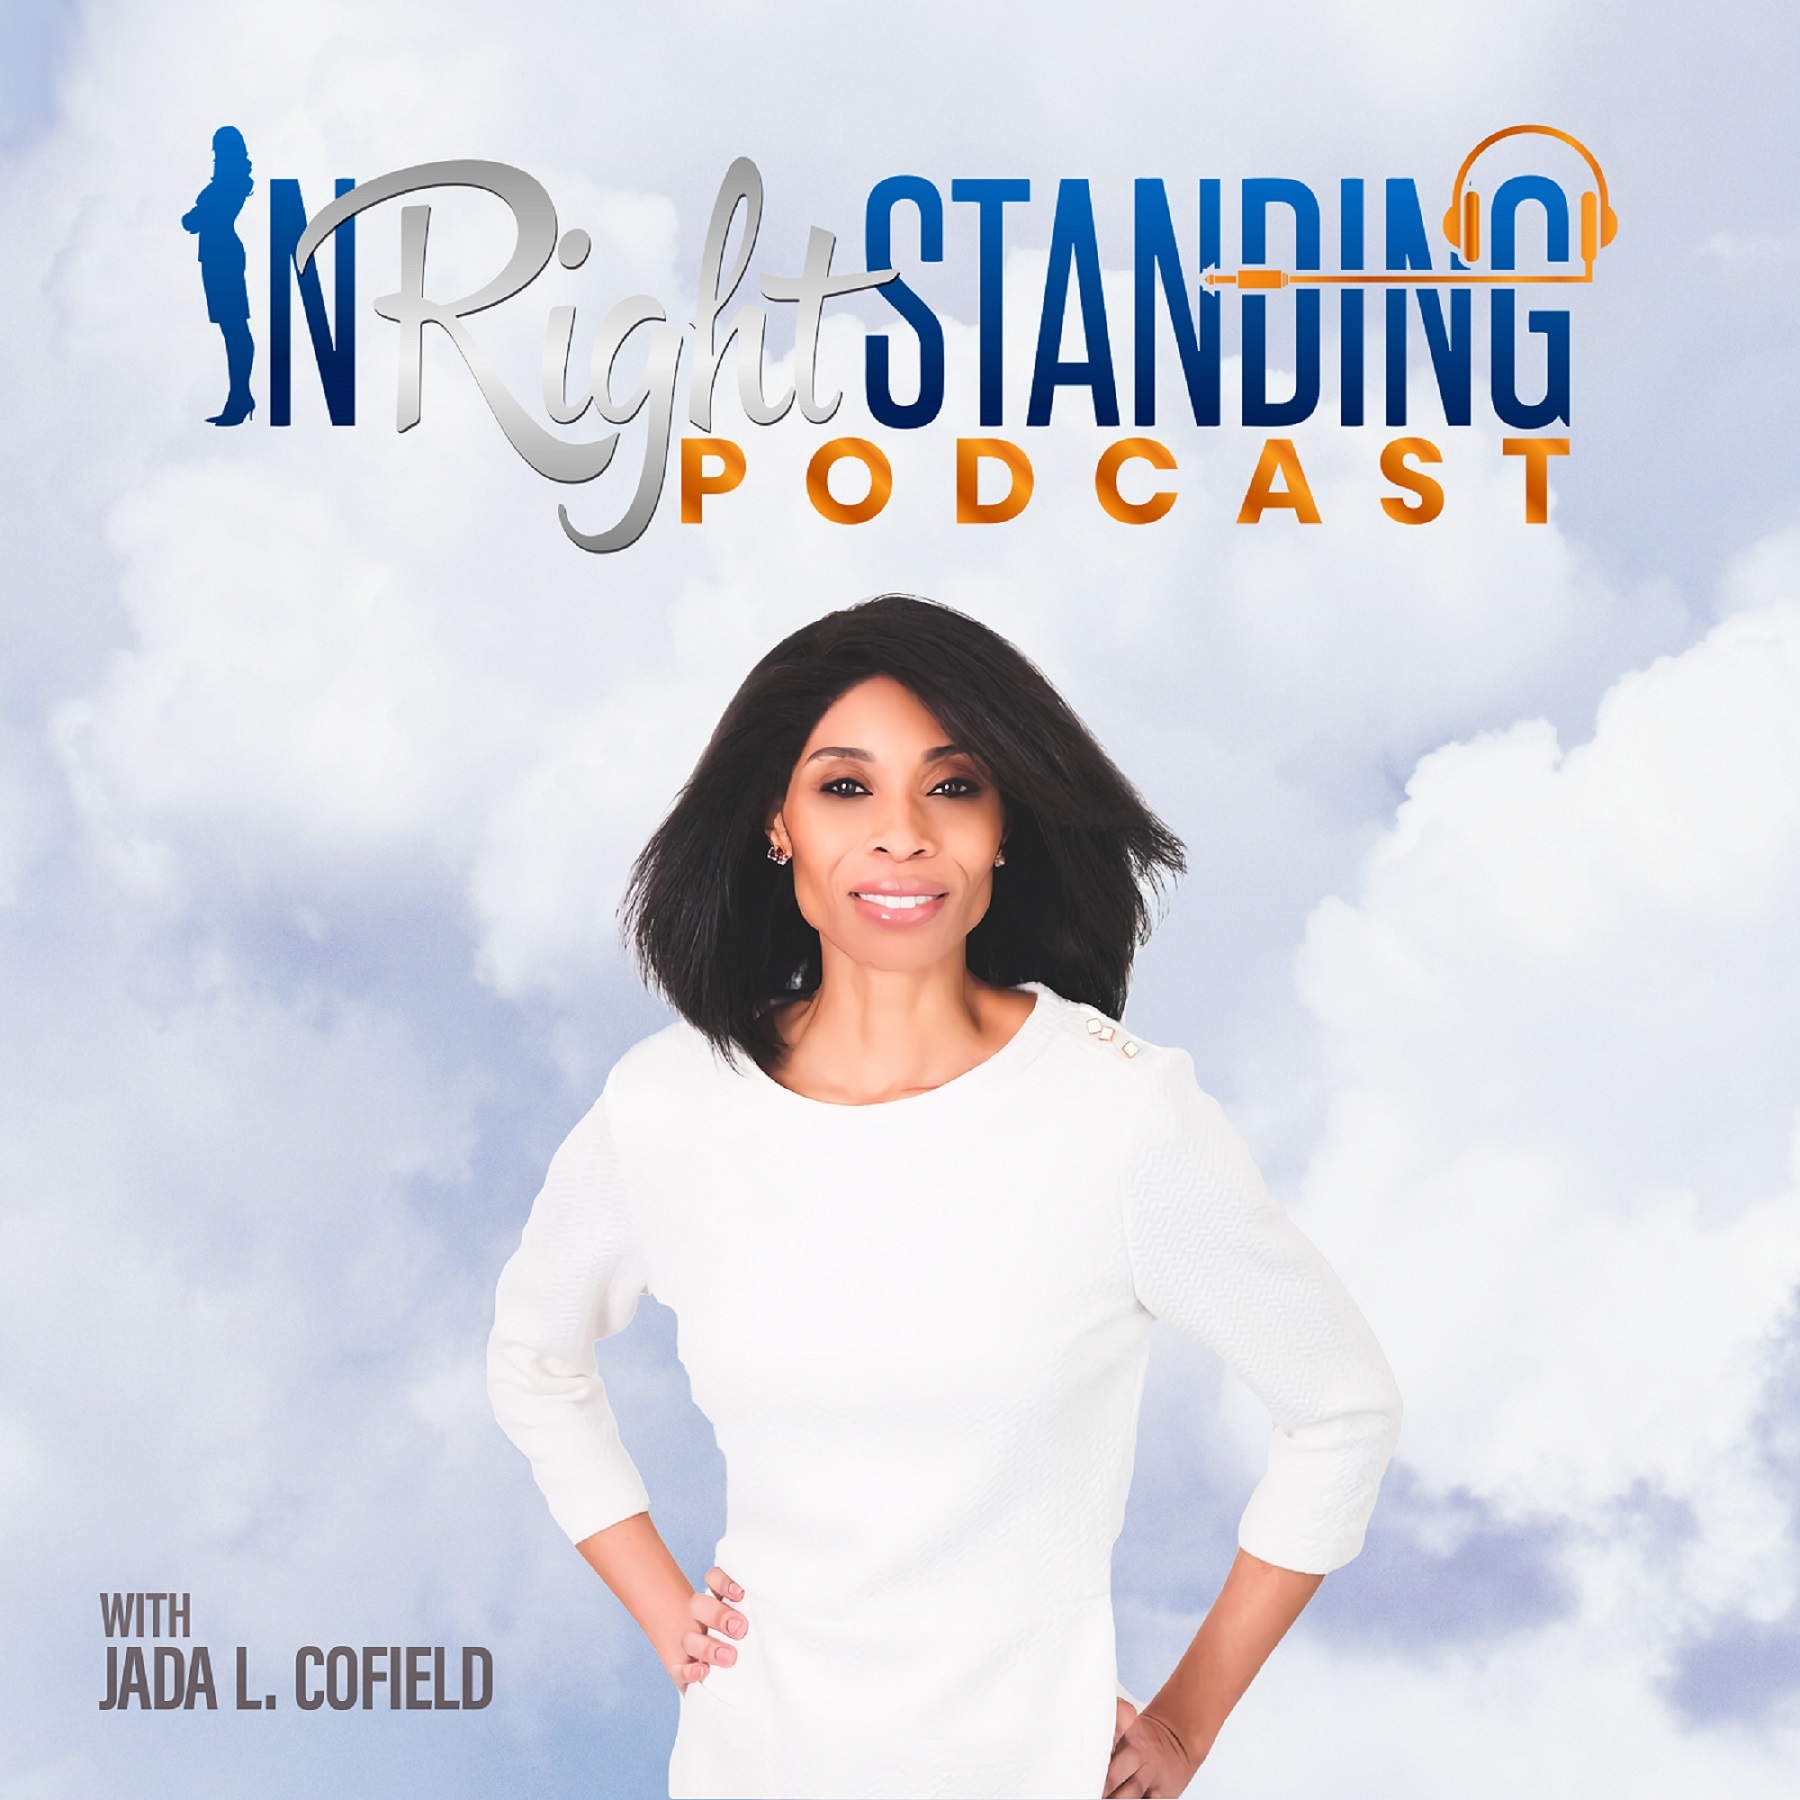 In Right Standing Podcast w/ Jada L. Cofield